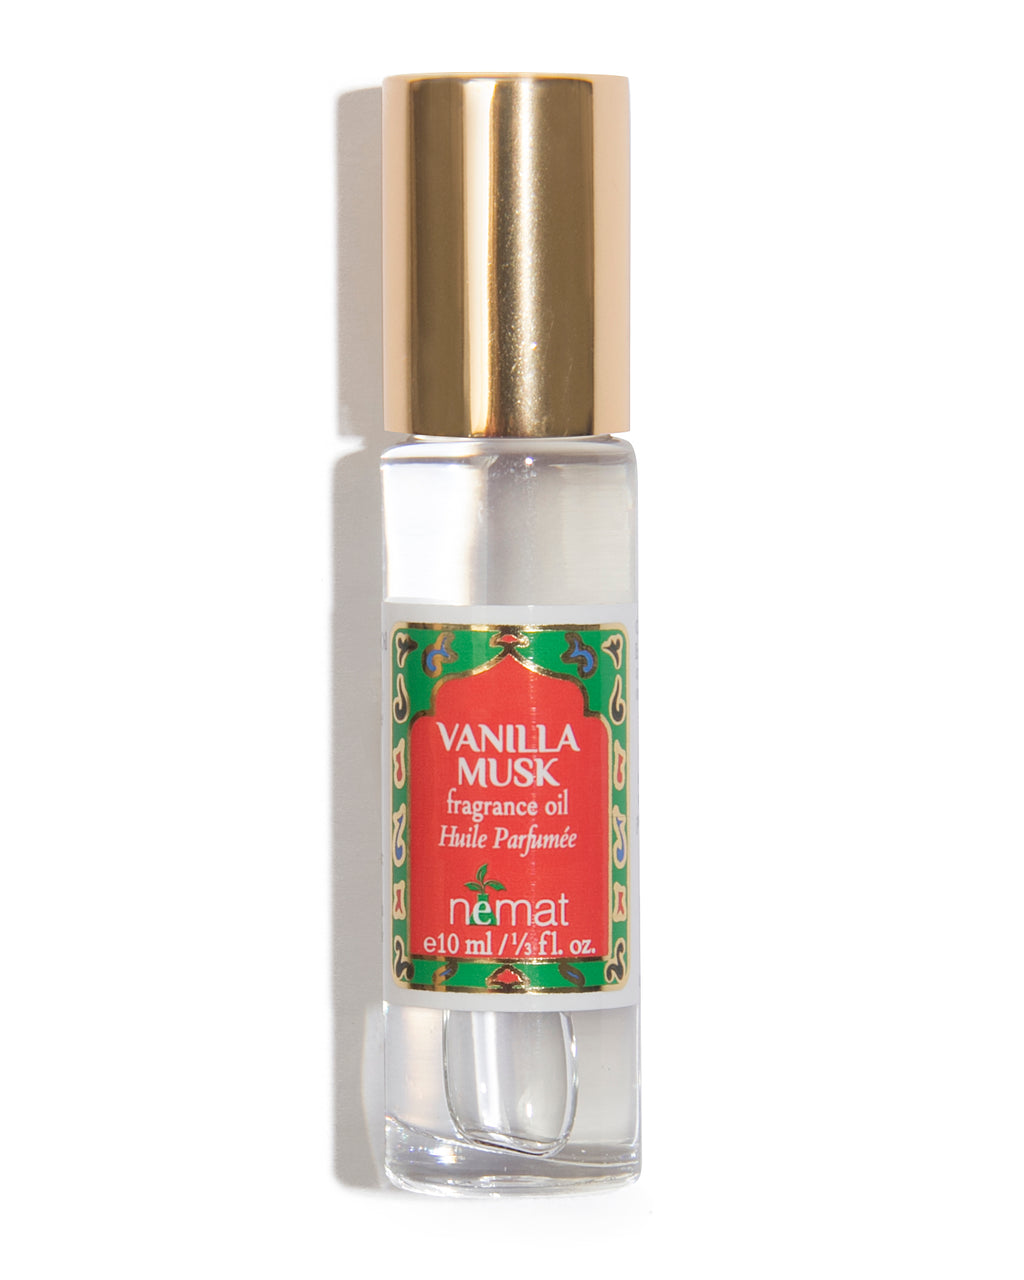 Nemet Vanilla Musk Perfume Oil Roll-On (10ml /.34fl Oz) NEW